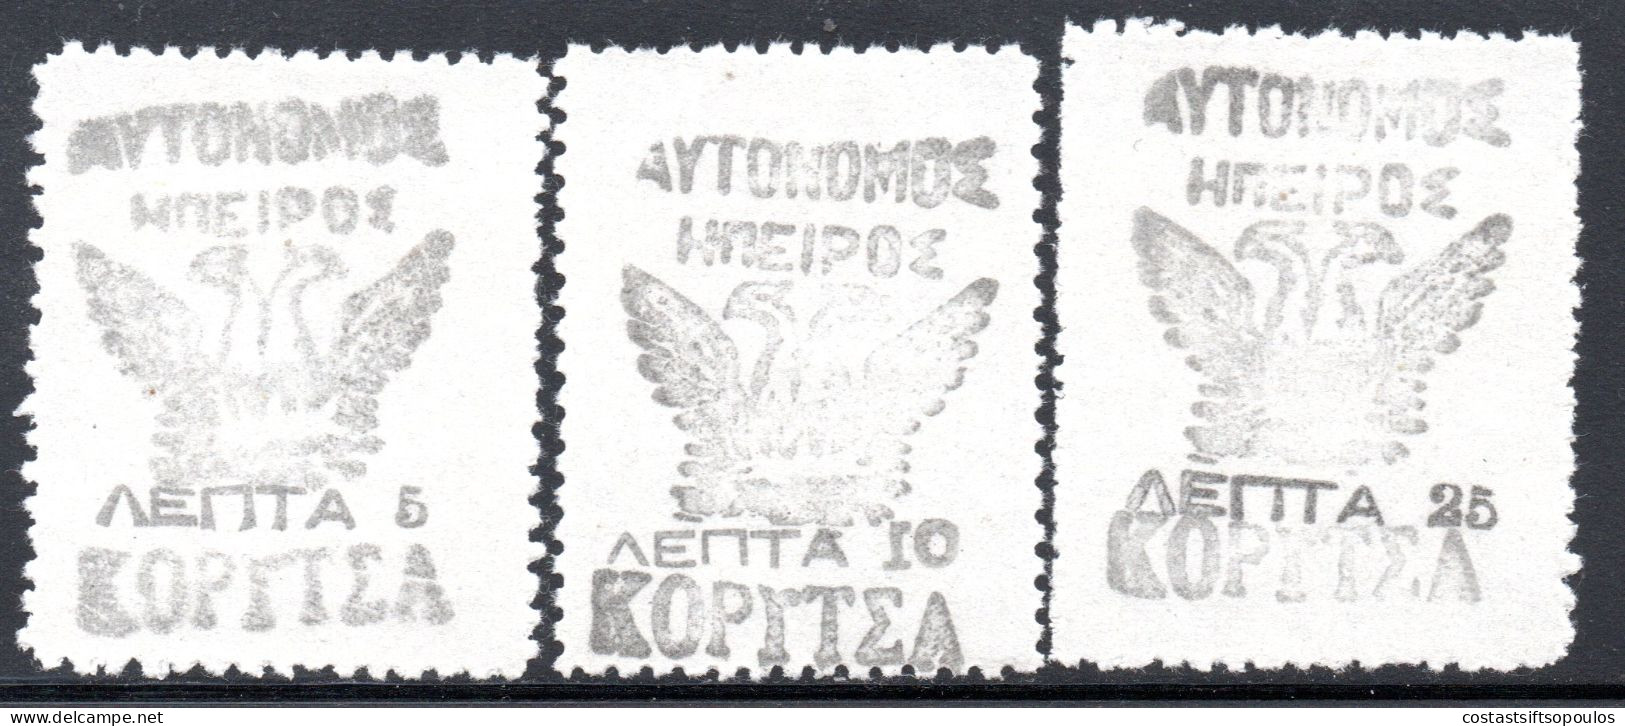 3033.GREECE,ALBANIA,NORTH EPIRUS.1914 KORYTSA UNOFFICIAL ISSUE,WITHOUT GUM AS ISSUED - Epirus & Albanie